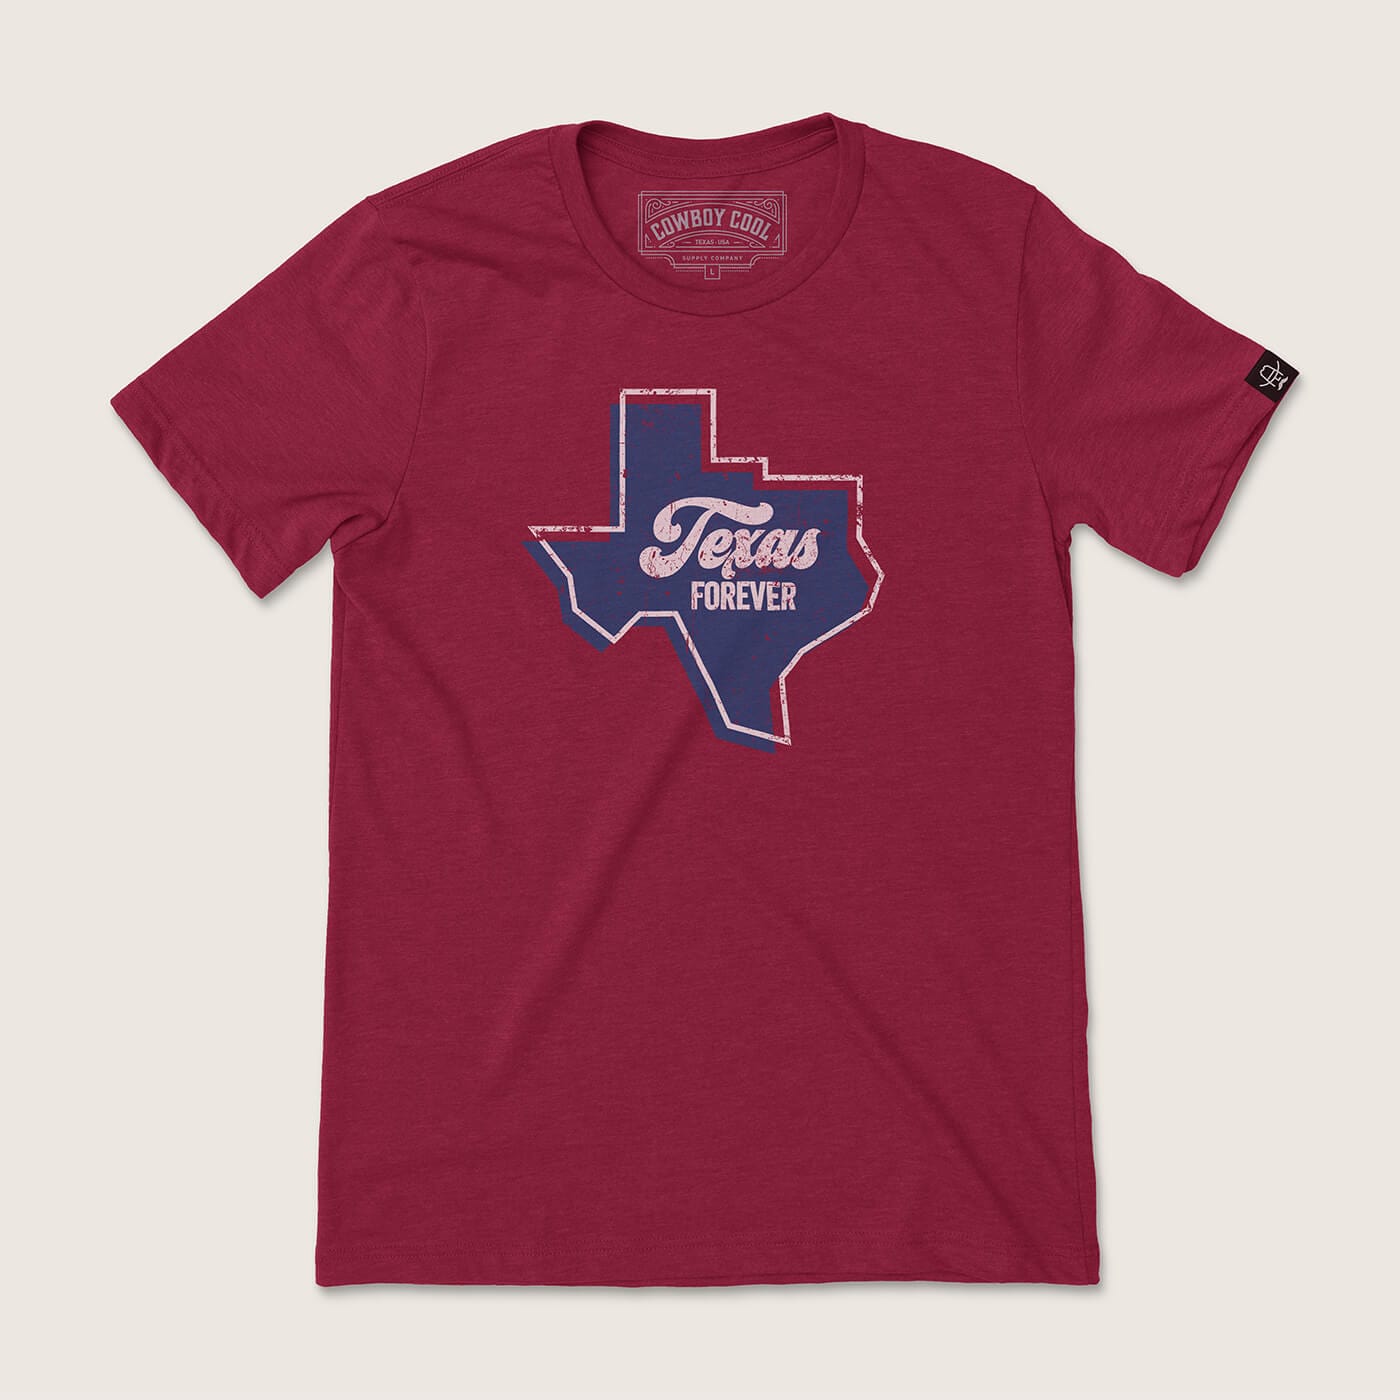 Cowboy Cool Shirts S Texas Forever T-Shirt